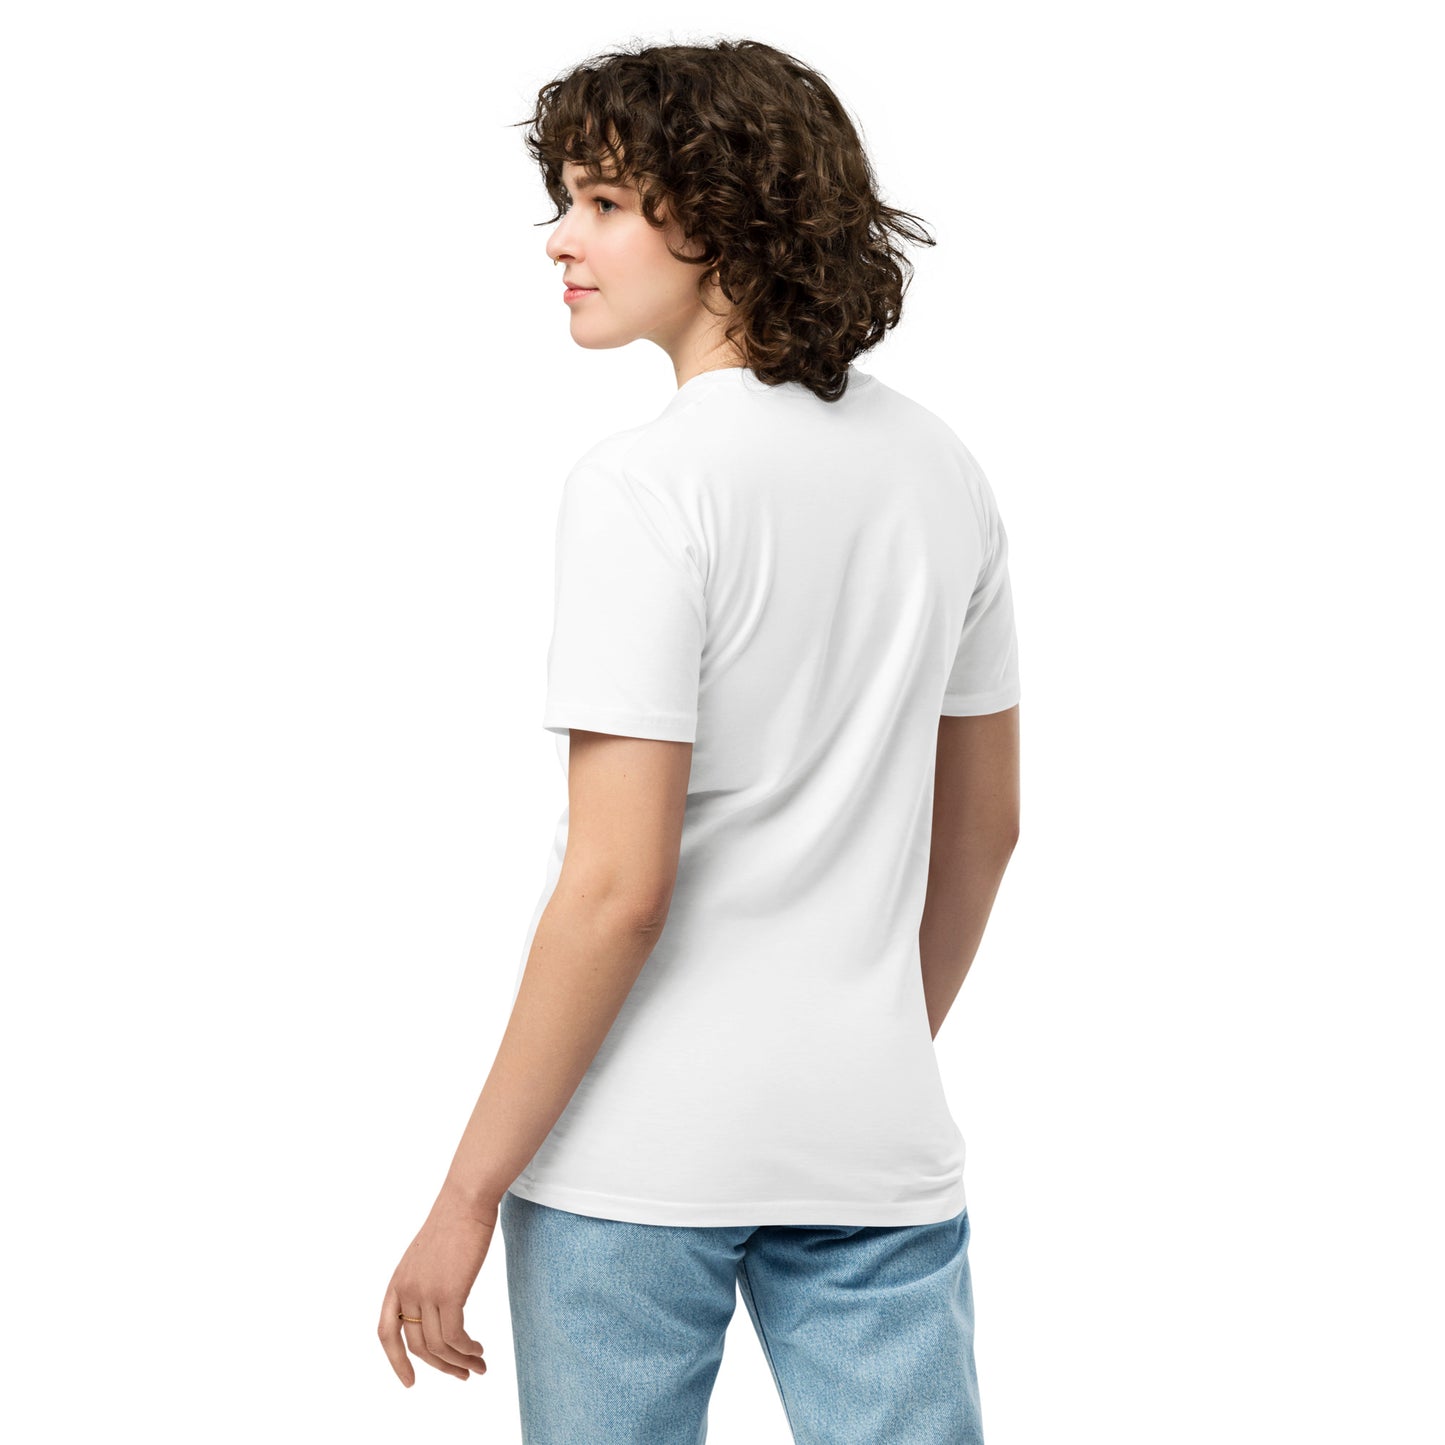 T-shirt afro femme - Color sweet blanc